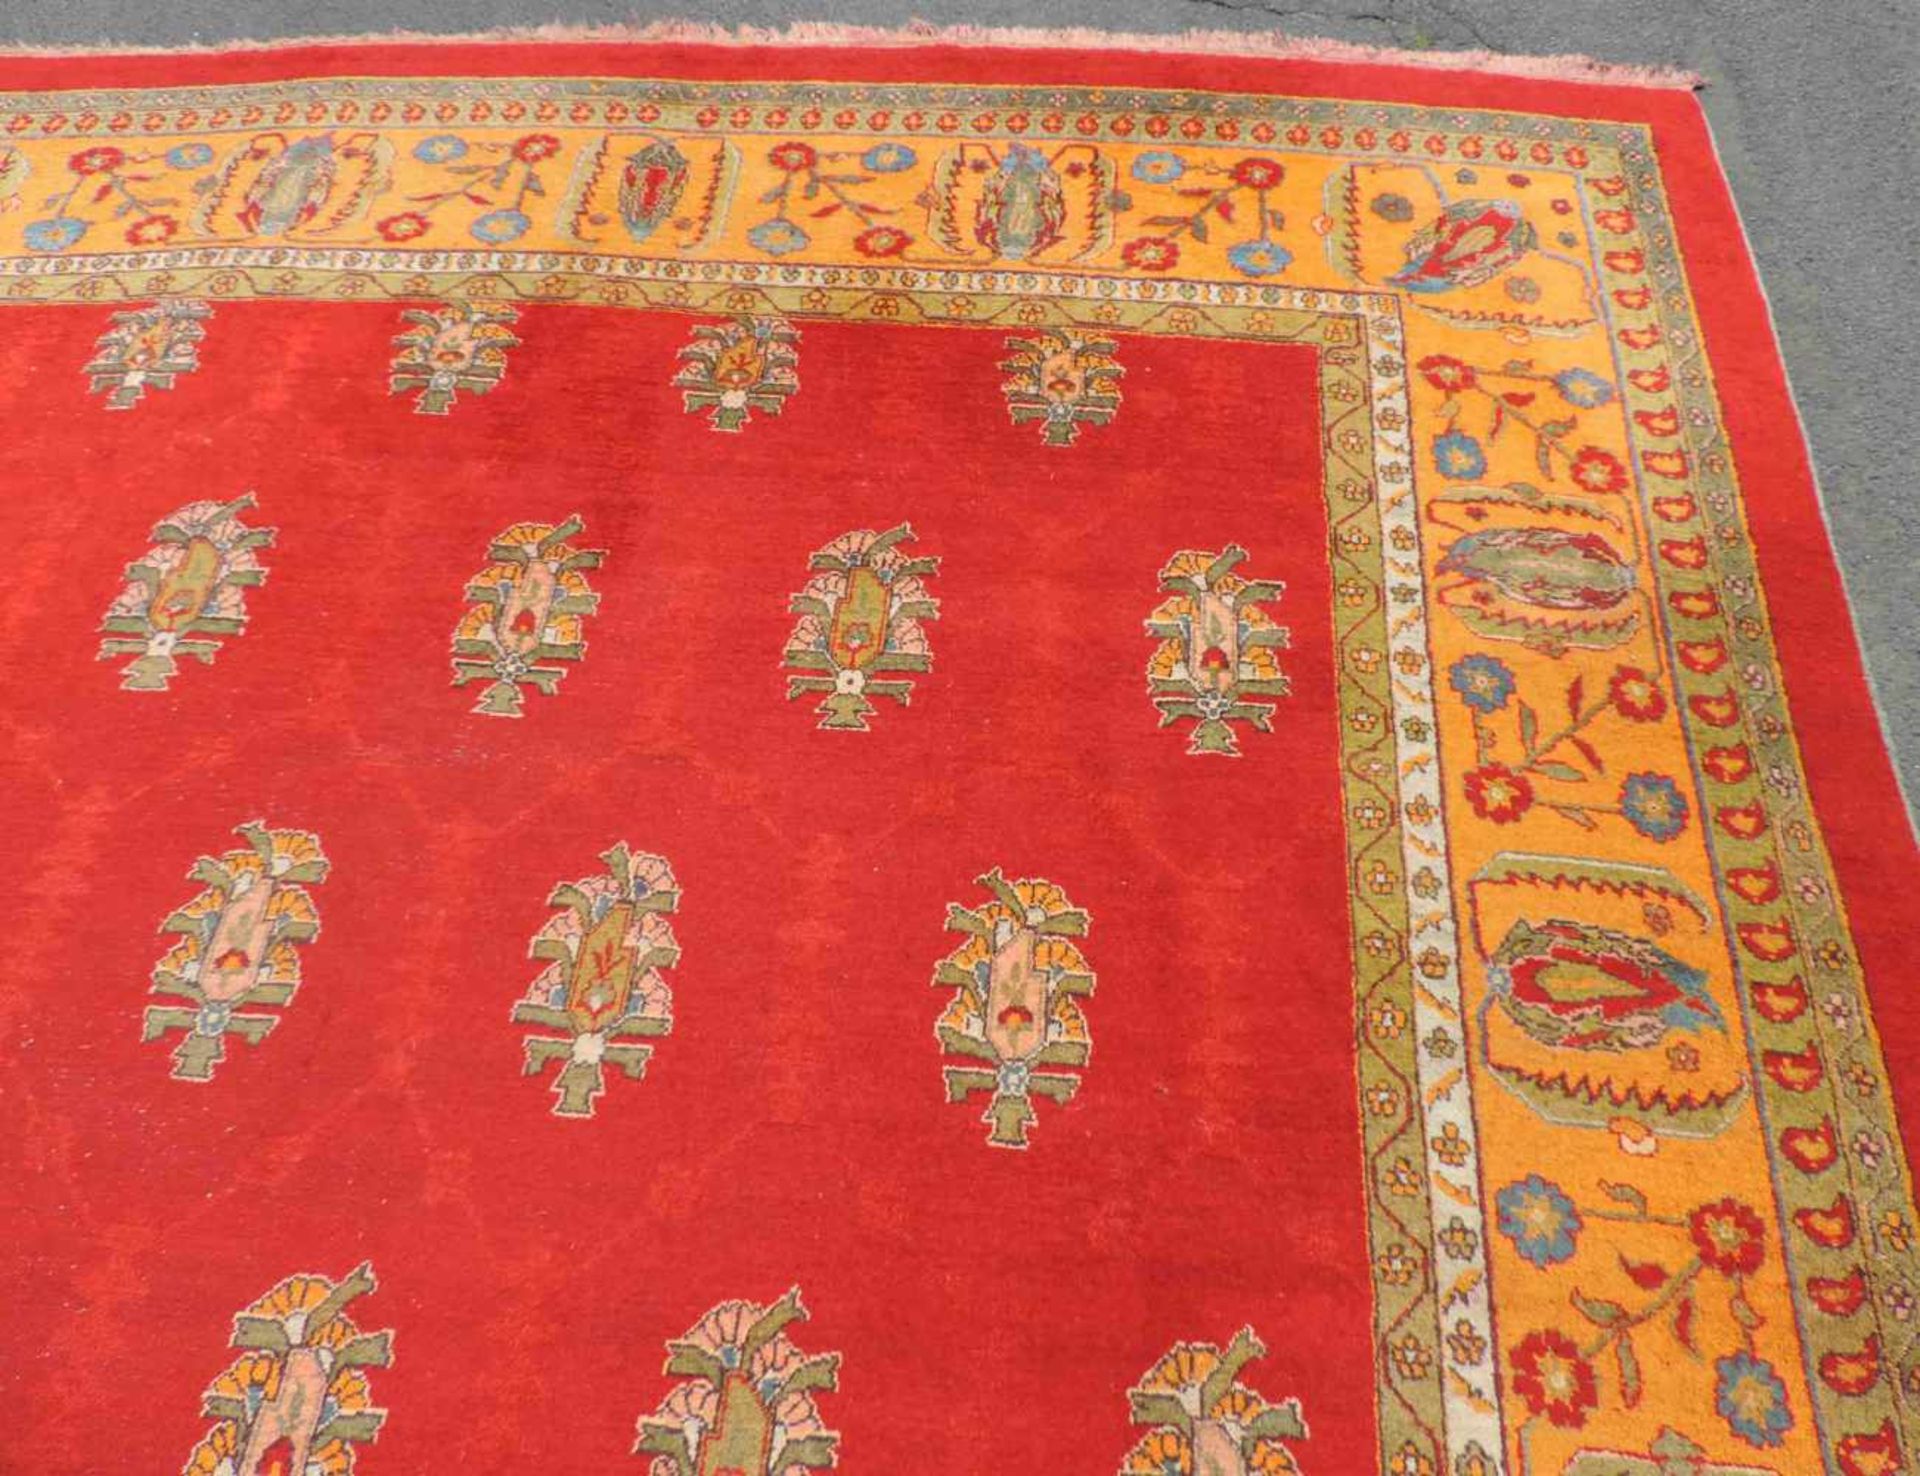 Mughal carpet. Deccani, India around 1800. - Image 6 of 10